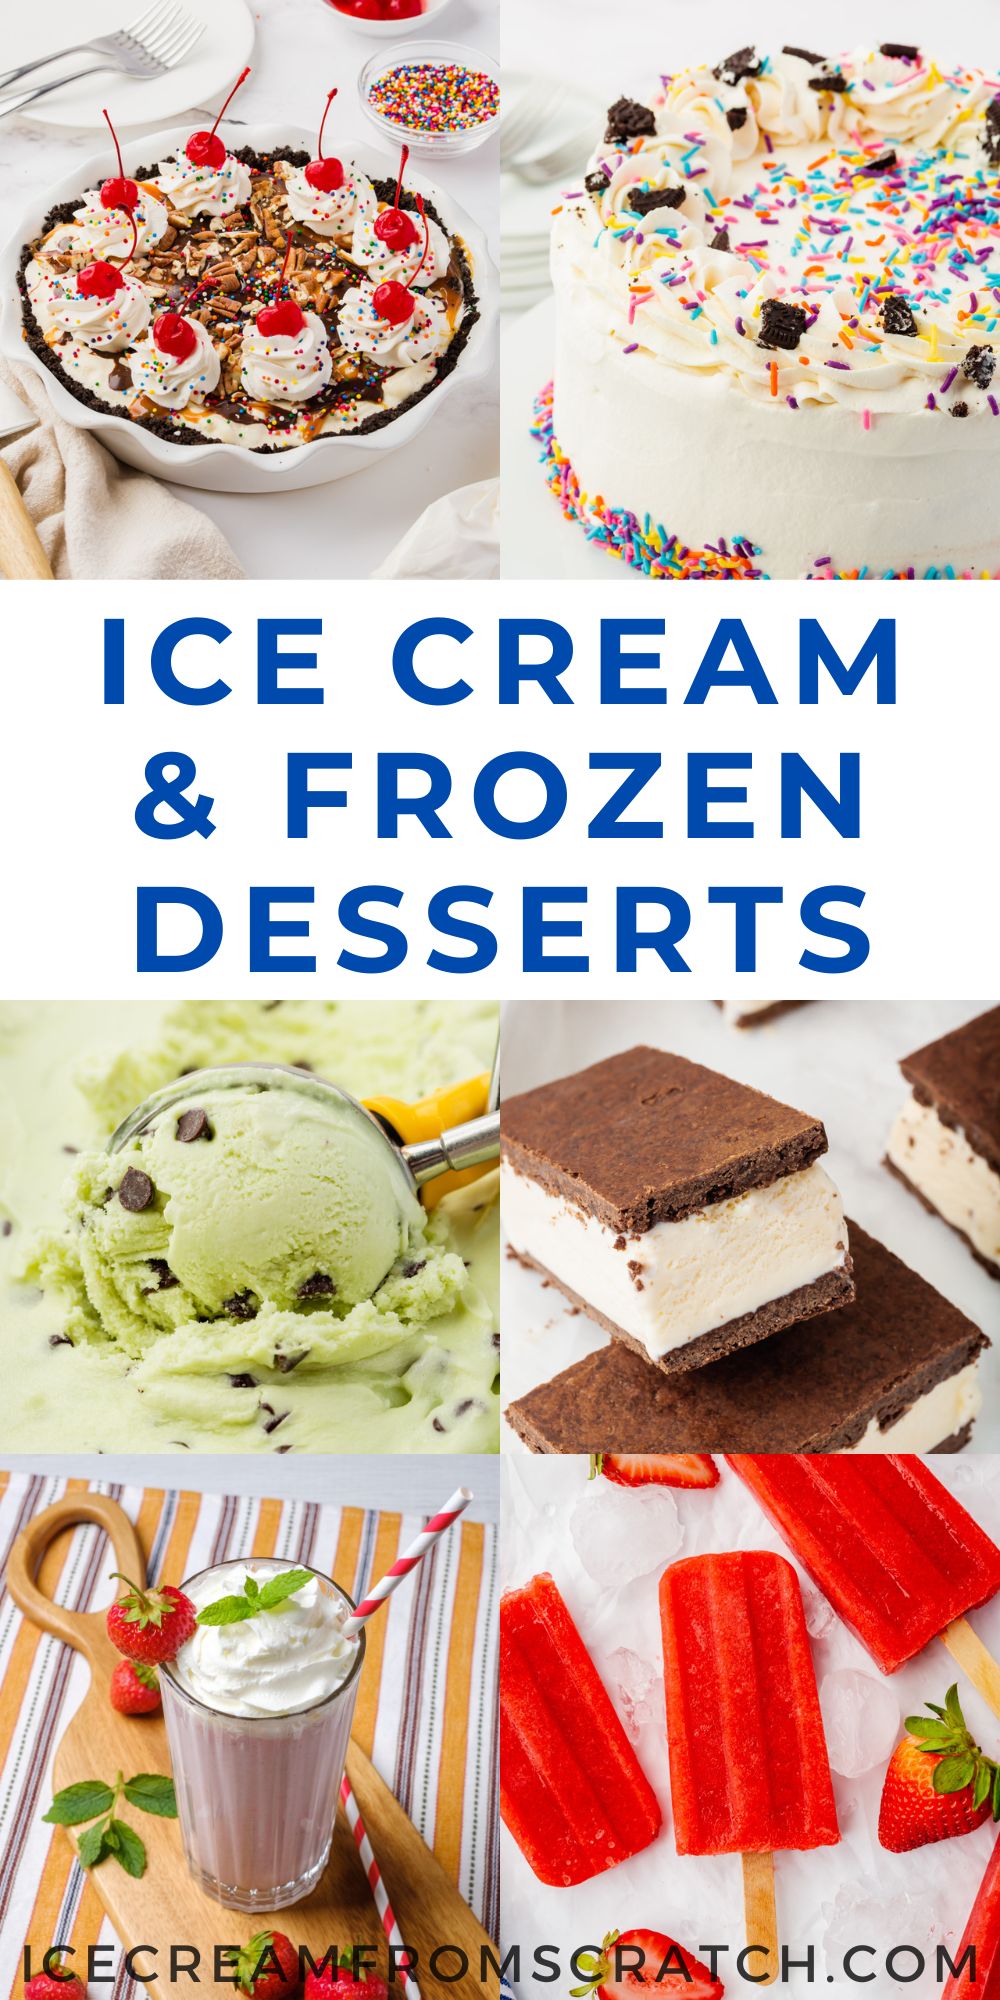 https://icecreamfromscratch.com/wp-content/uploads/2022/07/Ice-Cream-Desserts.jpg